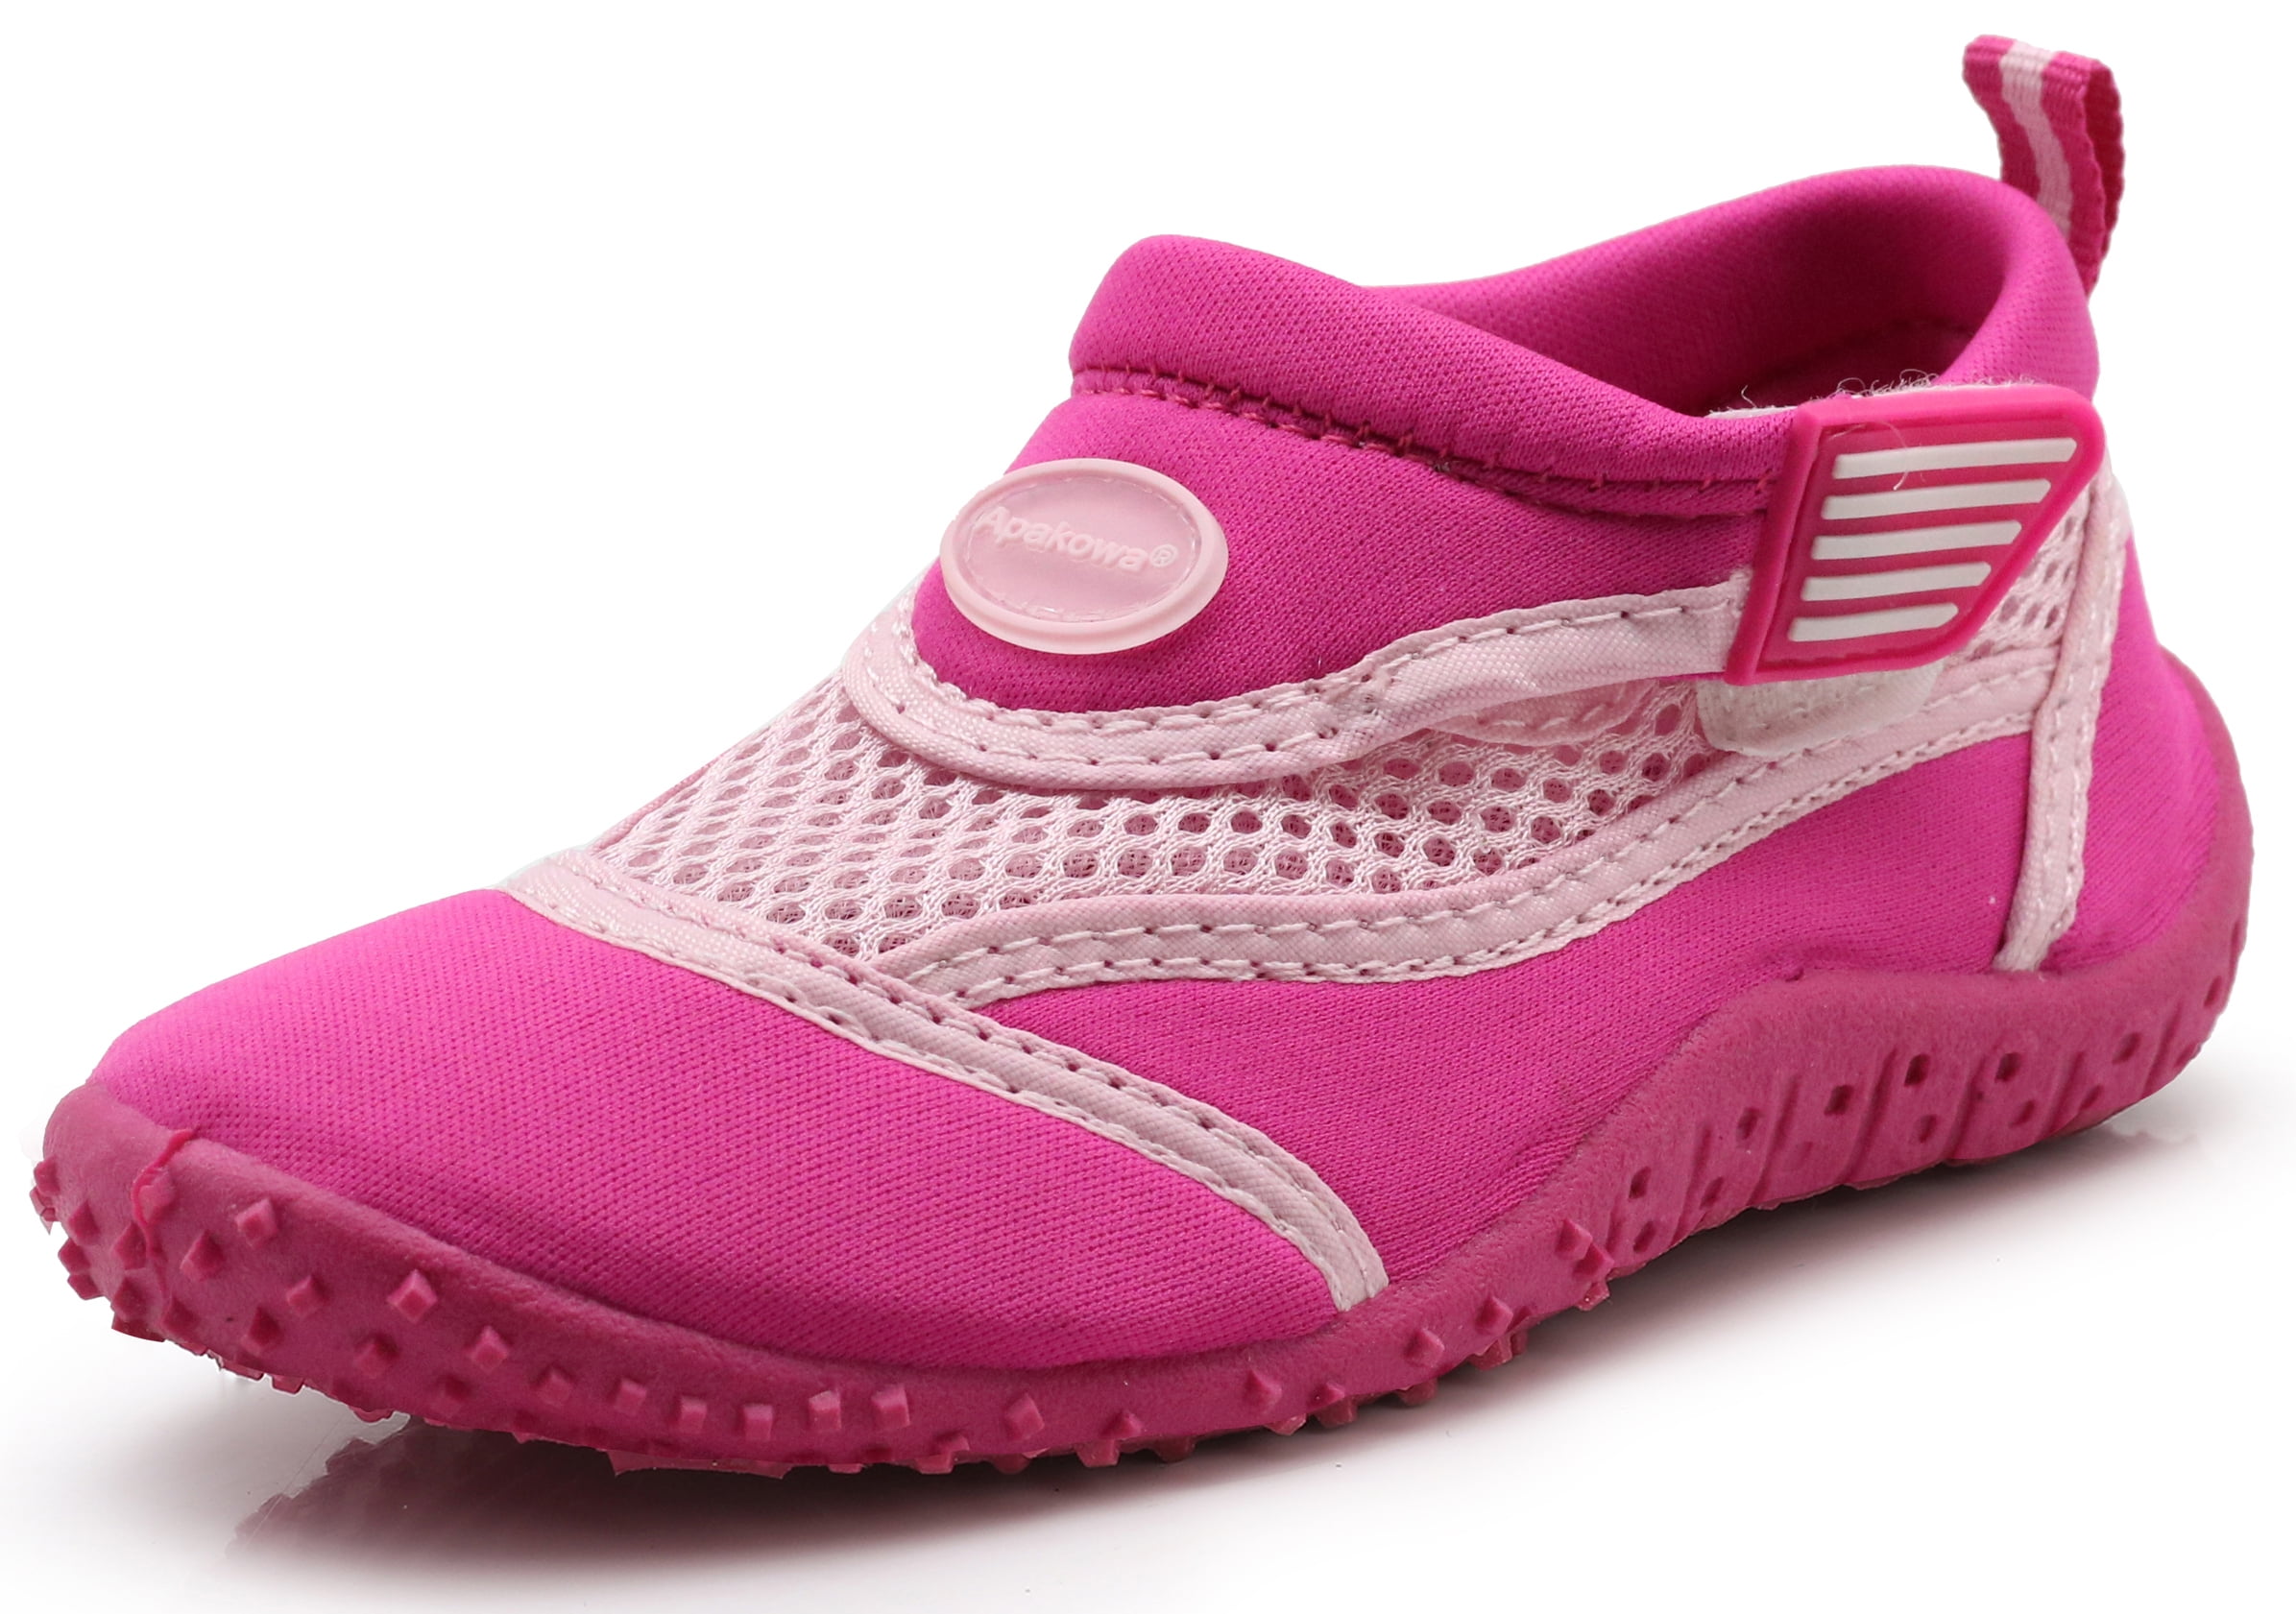 Toddler/Little Kid/Big Kid Boys & Girls Water Shoes Lightweight Comfort Sole Easy Walking Athletic Slip on Aqua Sock 